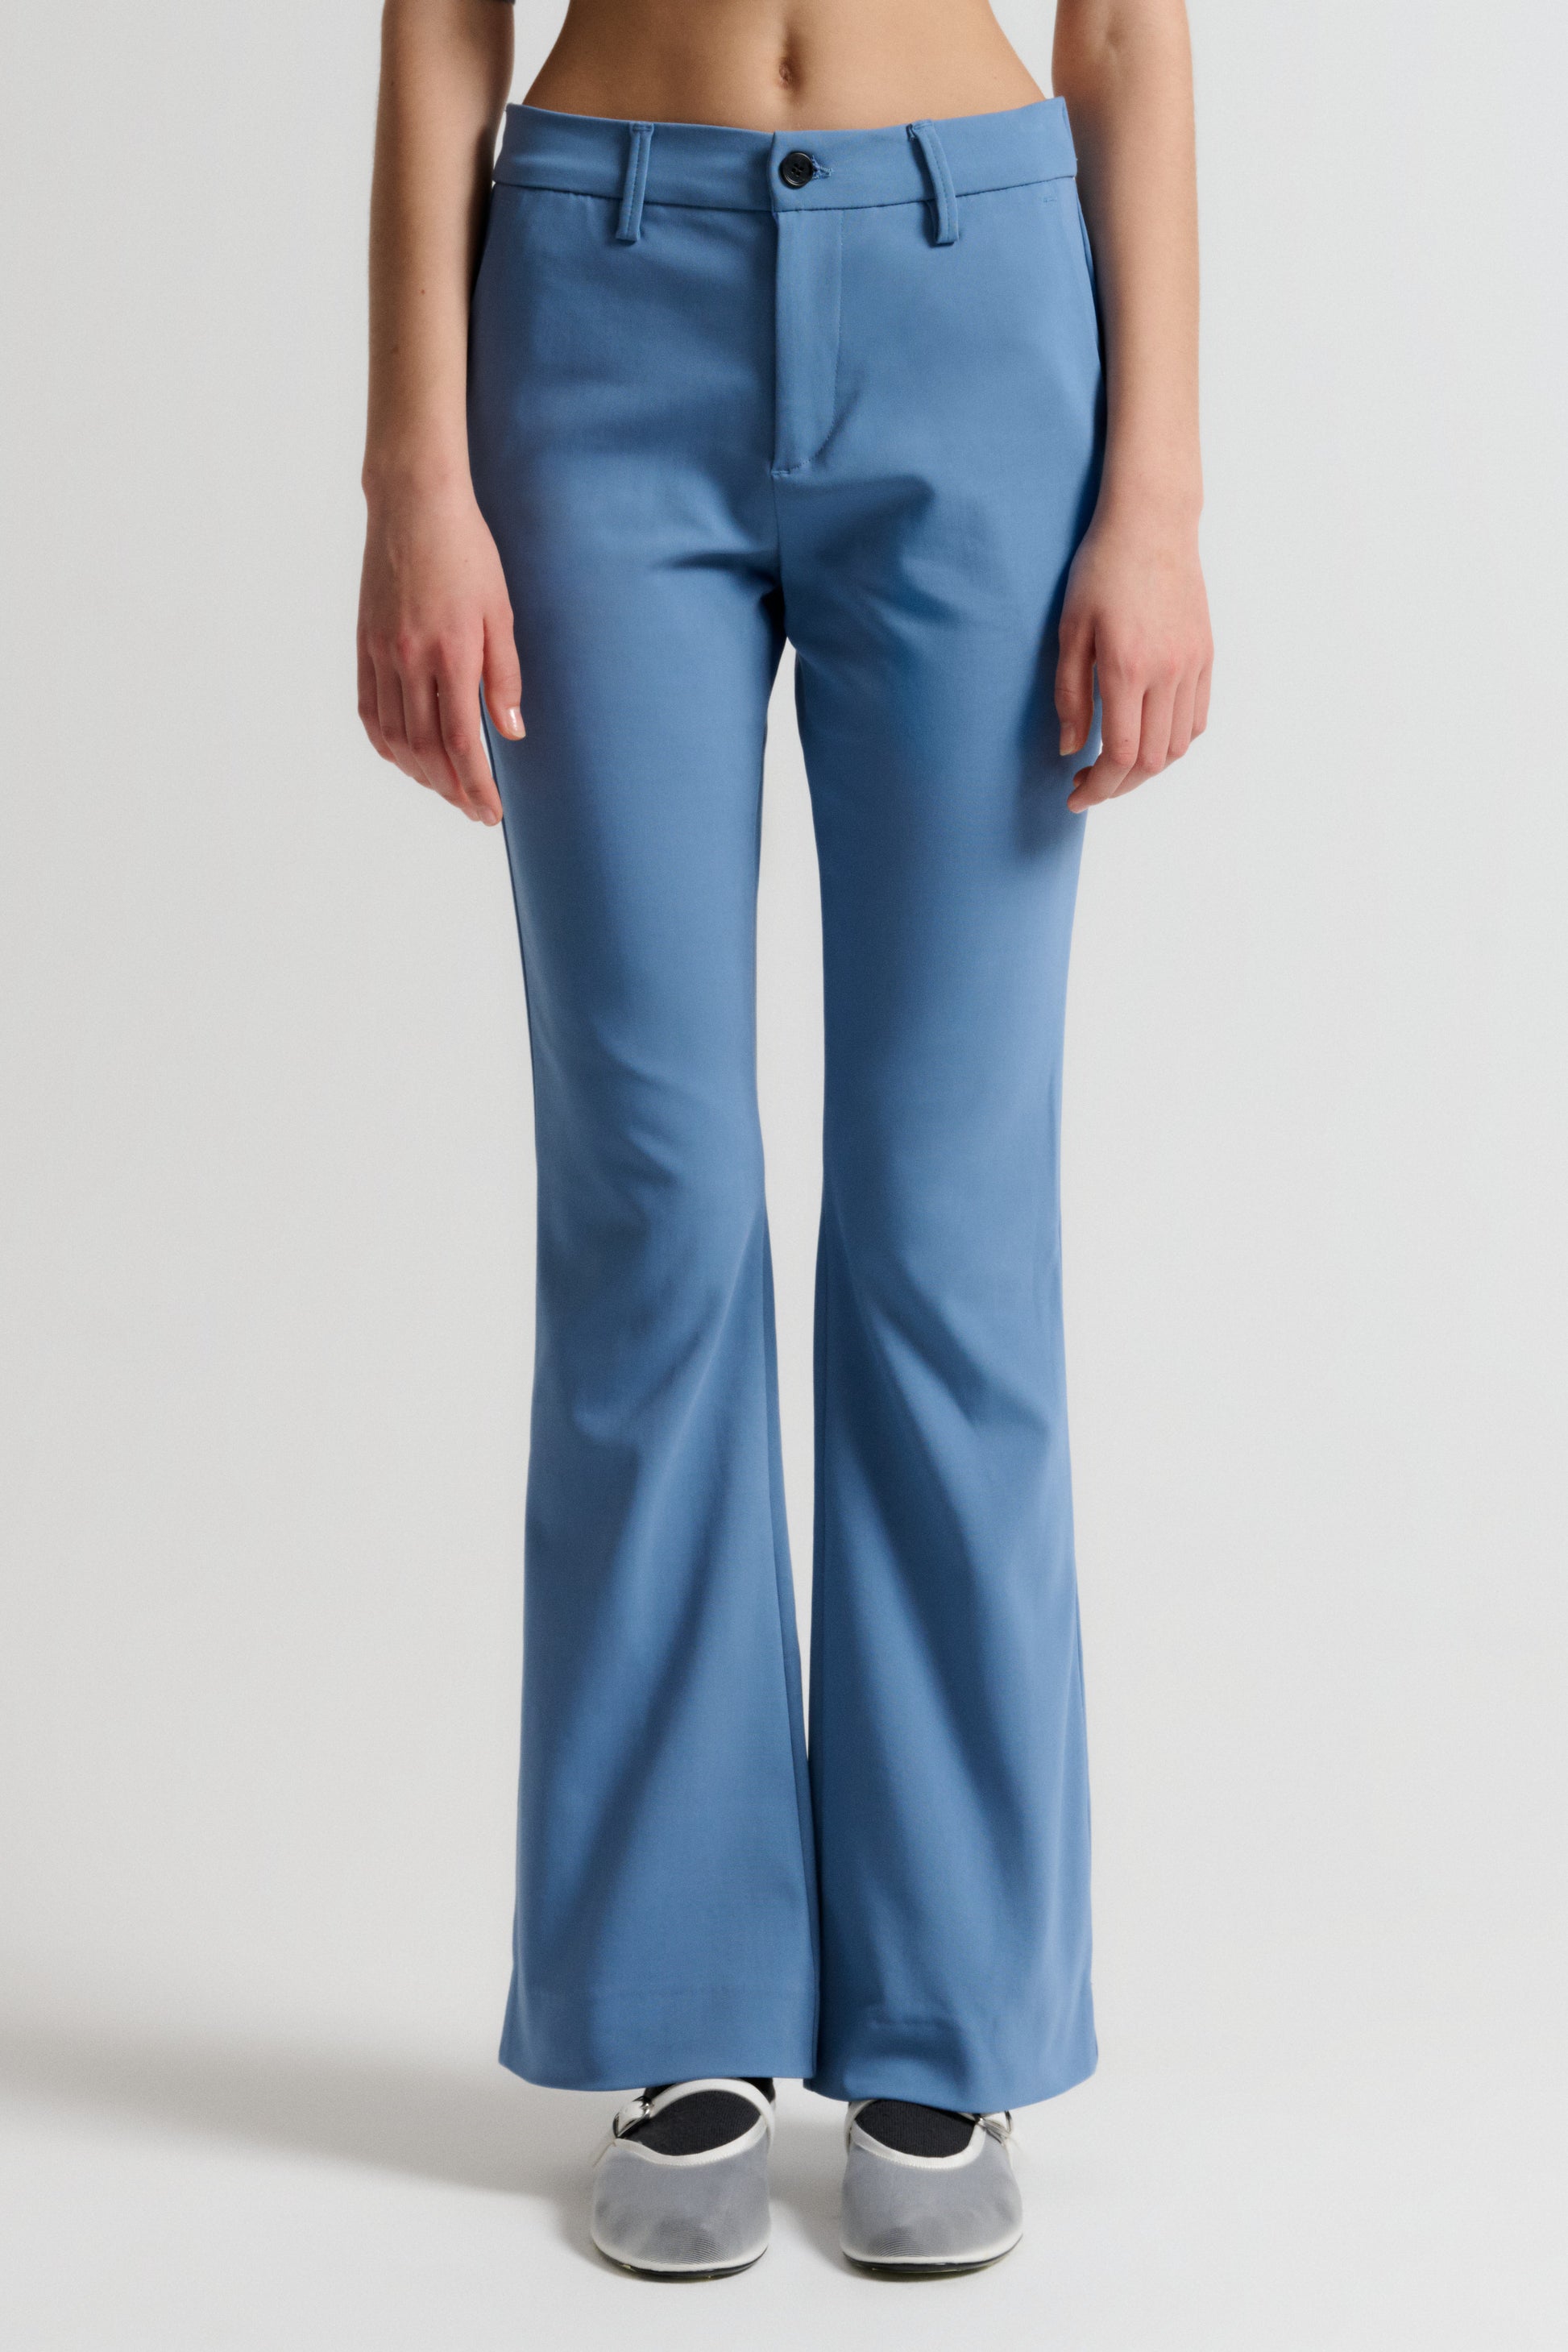 IVY Copenhagen IVY-Alice Flare Pant Jeans & Pants 532 Dusty Light Blue